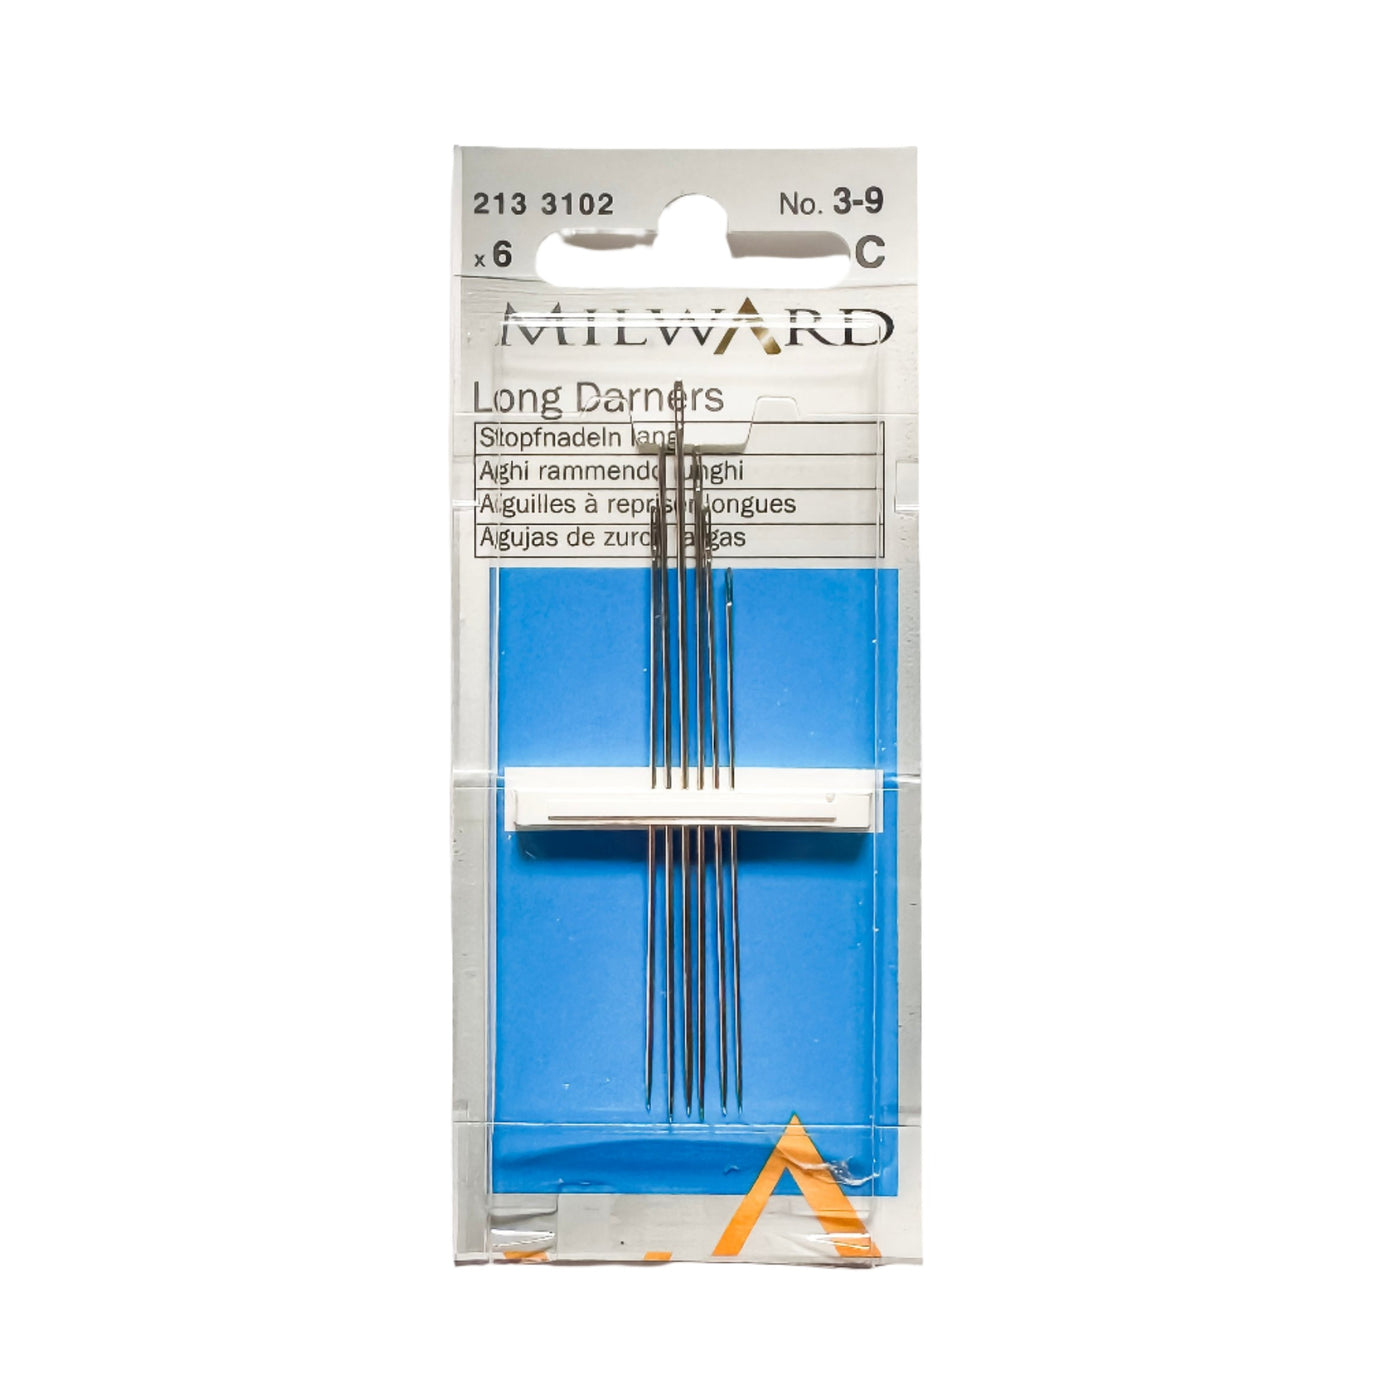 Milward Long Darners Needles